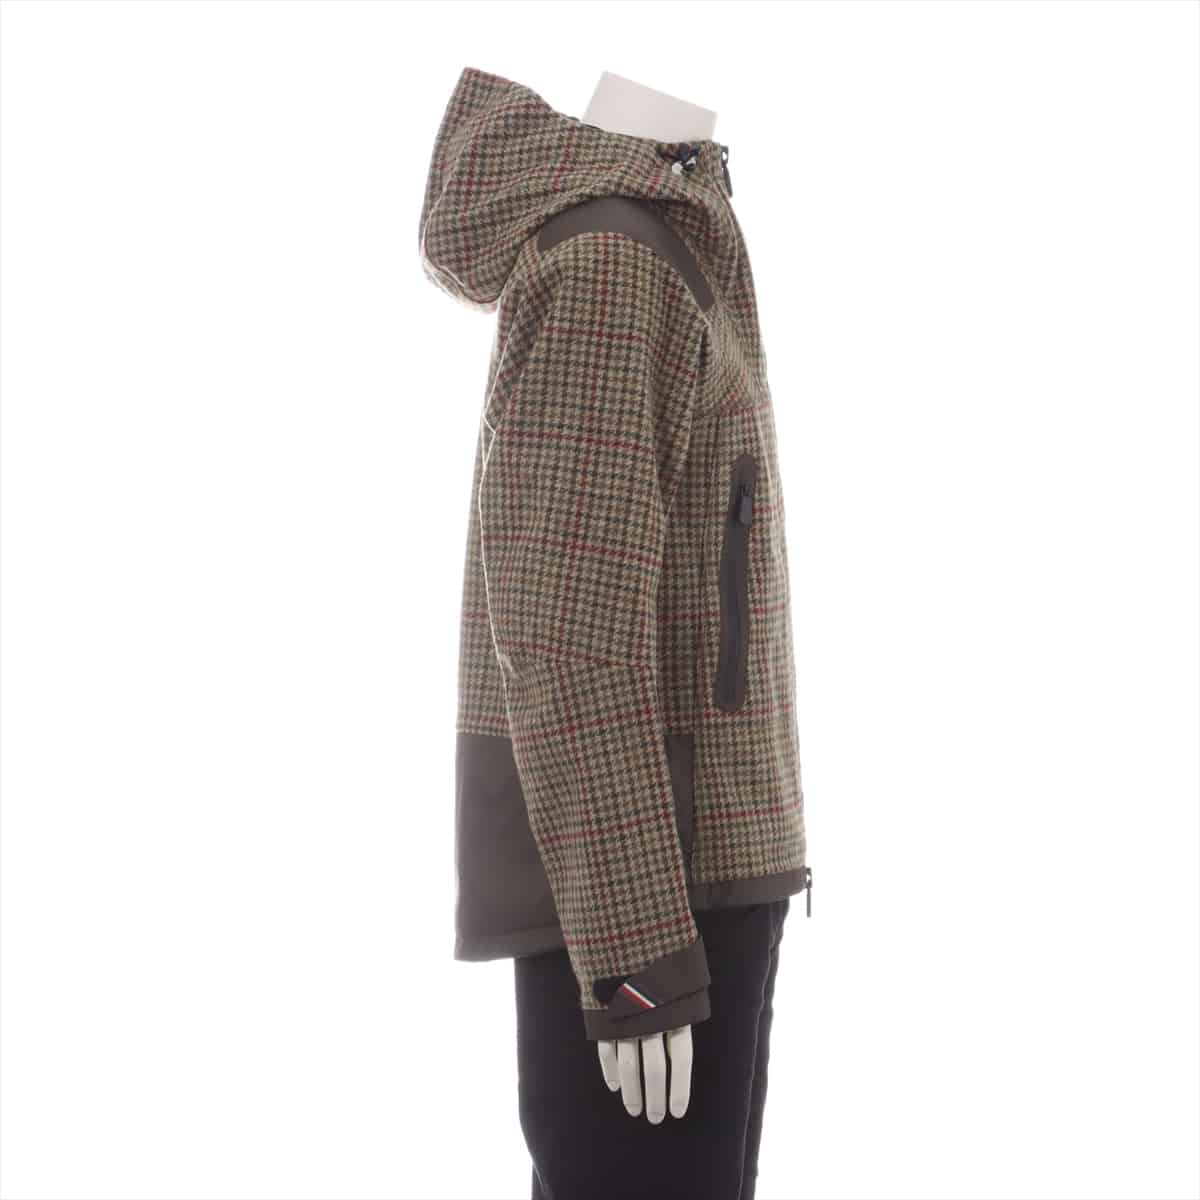 Moncler Grenoble 15 years Wool Mountain hoodie 1 Men's Khaki  PACKARD Front zip scratches